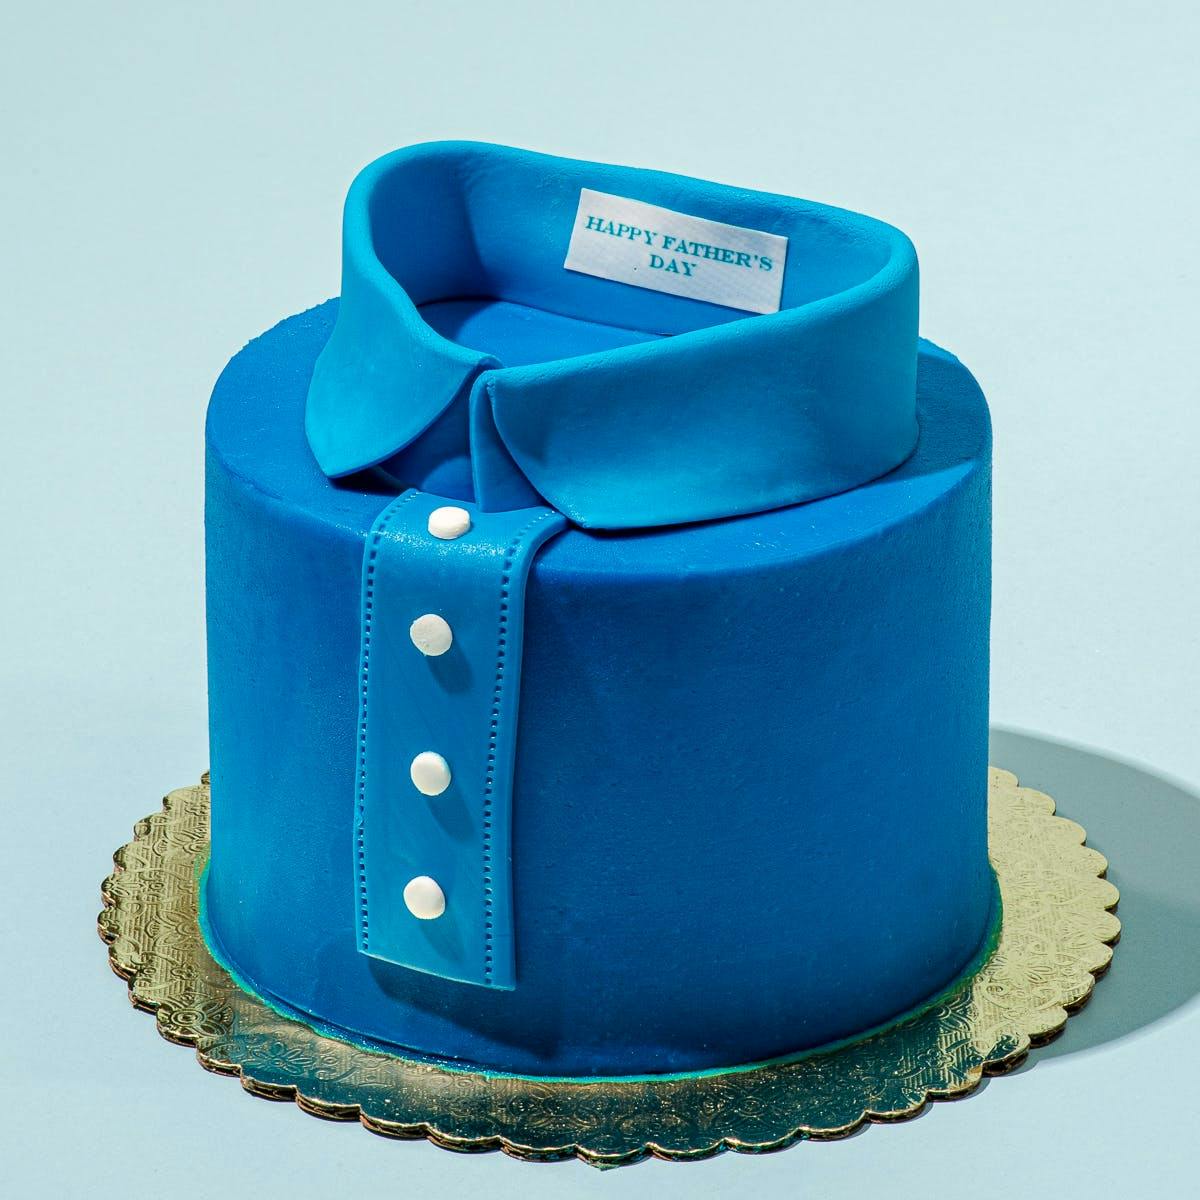 Savory Cake - Fatheres Day Cake Ideas - coucoucake